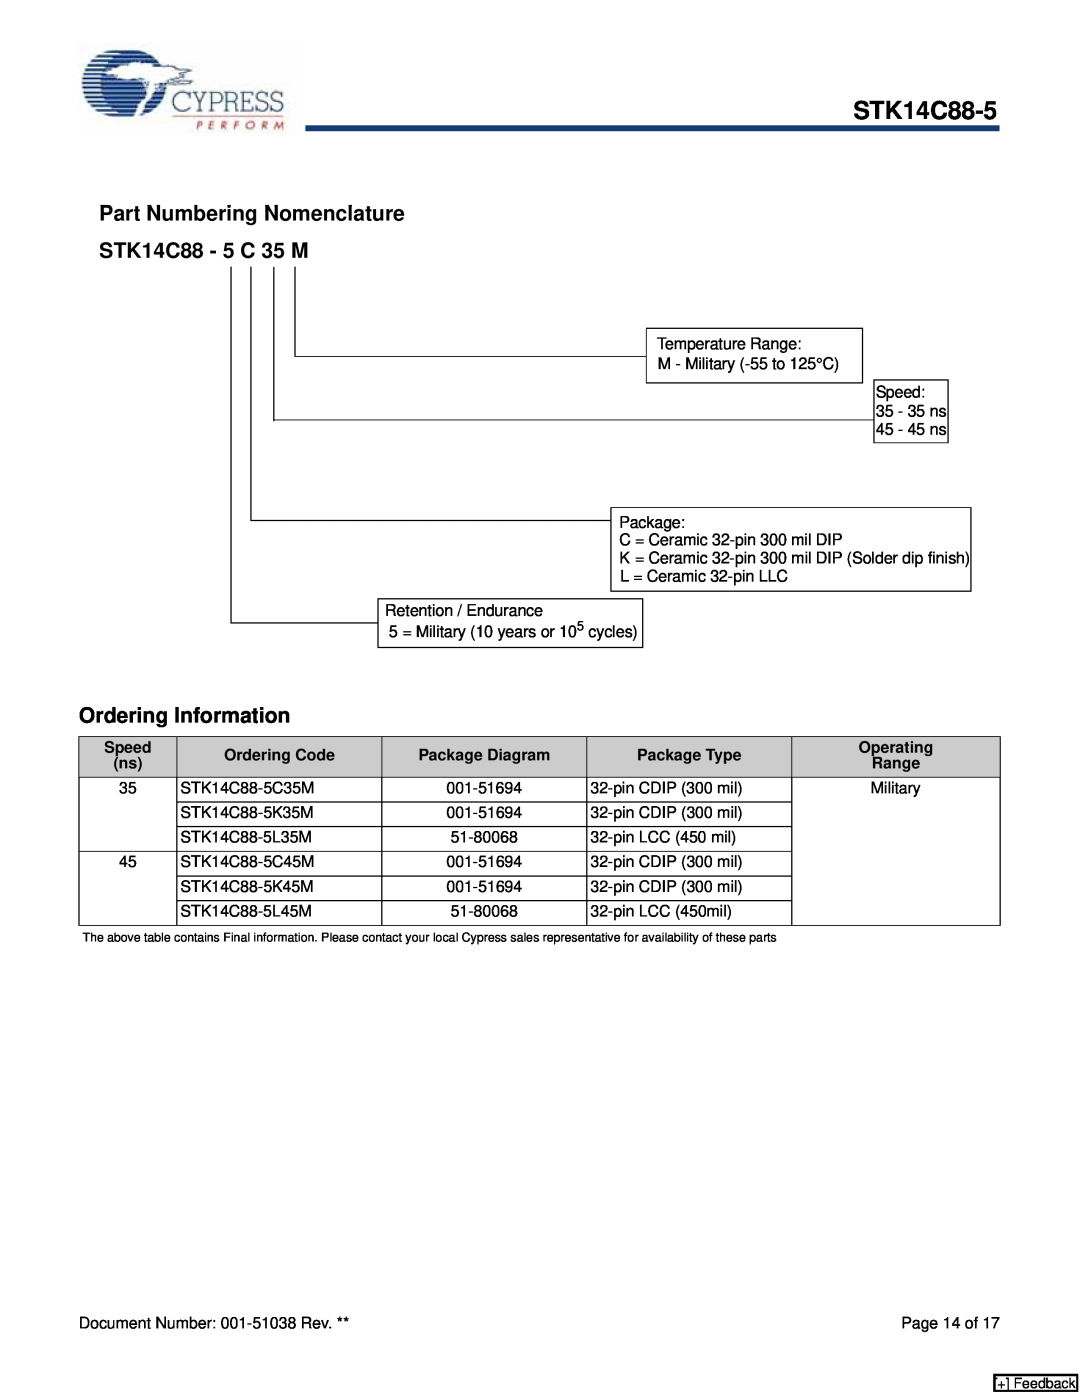 Cypress STK14C88-5 manual Part Numbering Nomenclature STK14C88 - 5 C 35 M, Ordering Information 